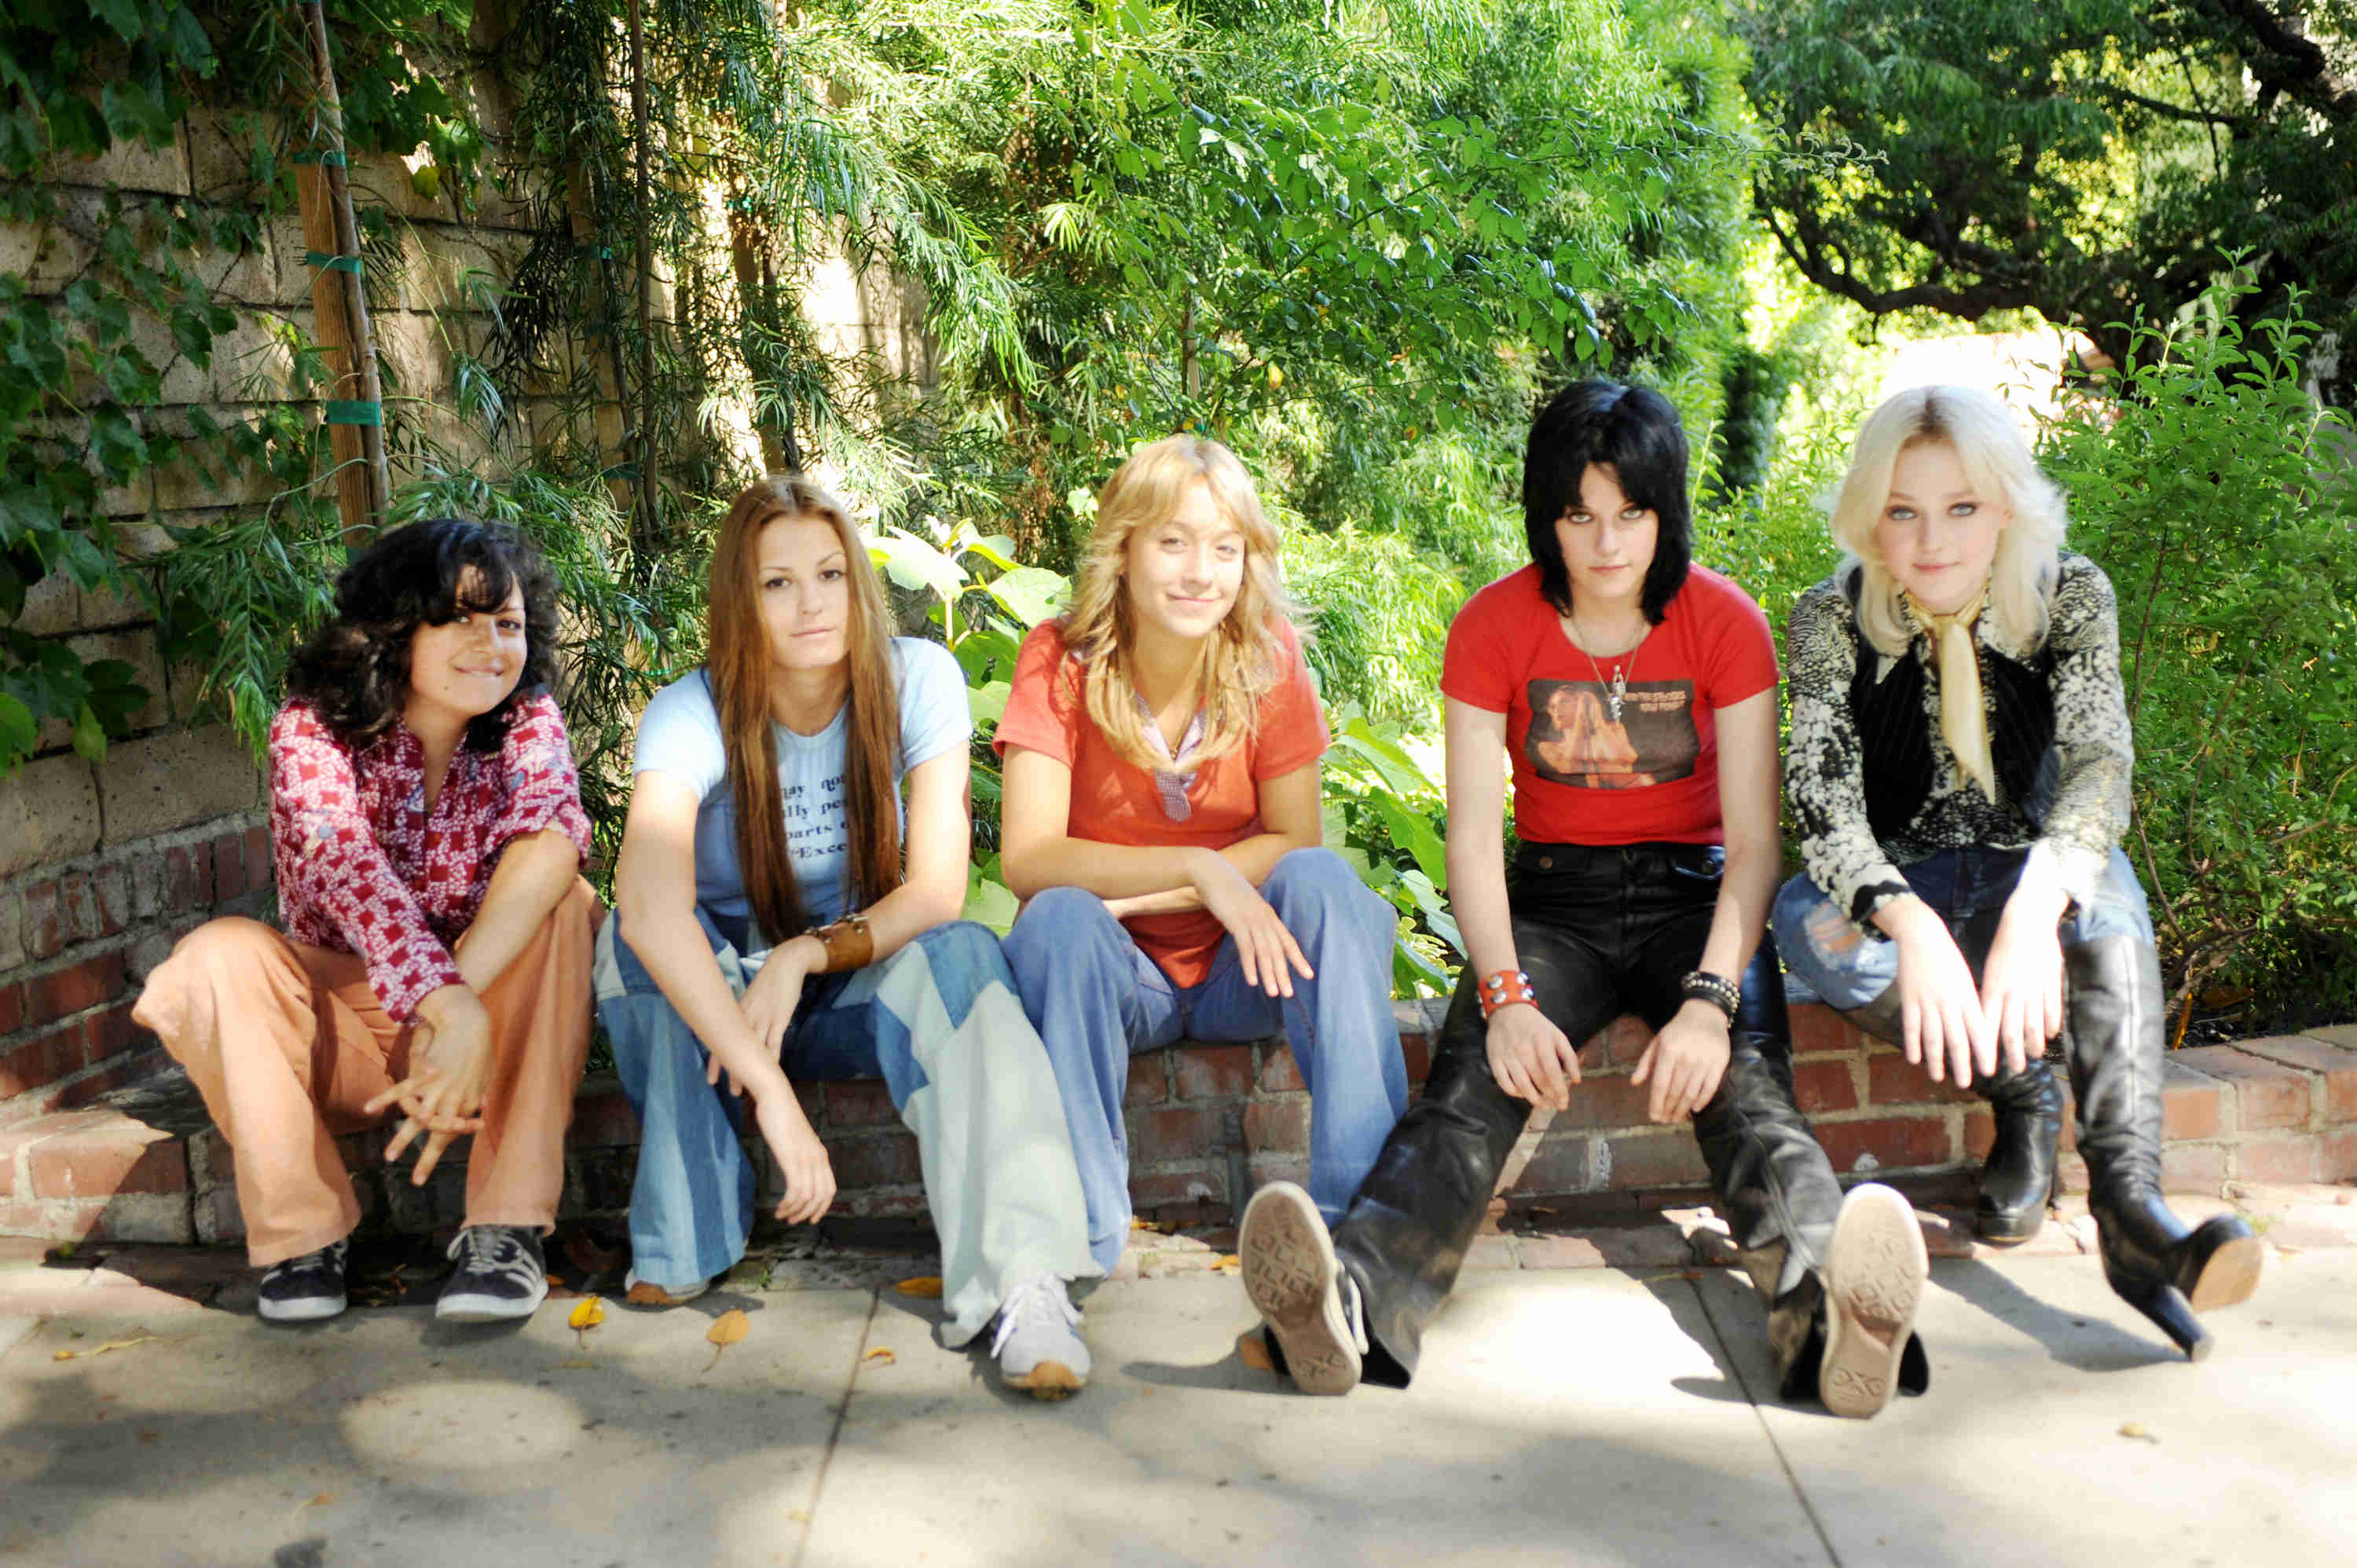 Alia Shawkat, Scout Taylor-Compton, Stella Maeve, Kristen Stewart and Dakota Fanning in Apparition's The Runaways (2010)